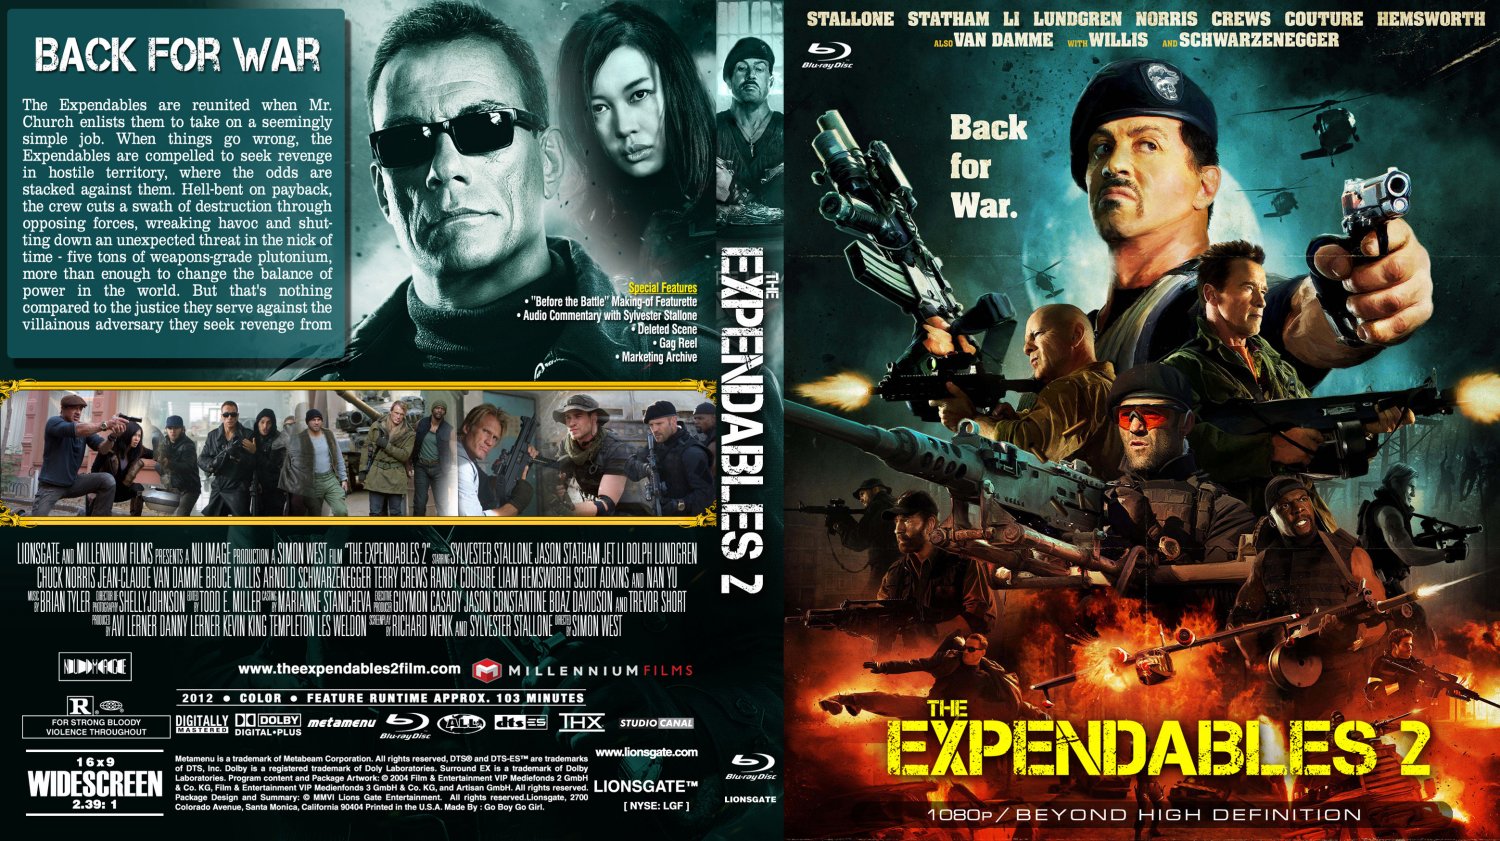 Читать неудержимый книга xiii. Expendables 2. Неудержимые (Blu-ray). The Expendables 2, 2012 DVD Cover.